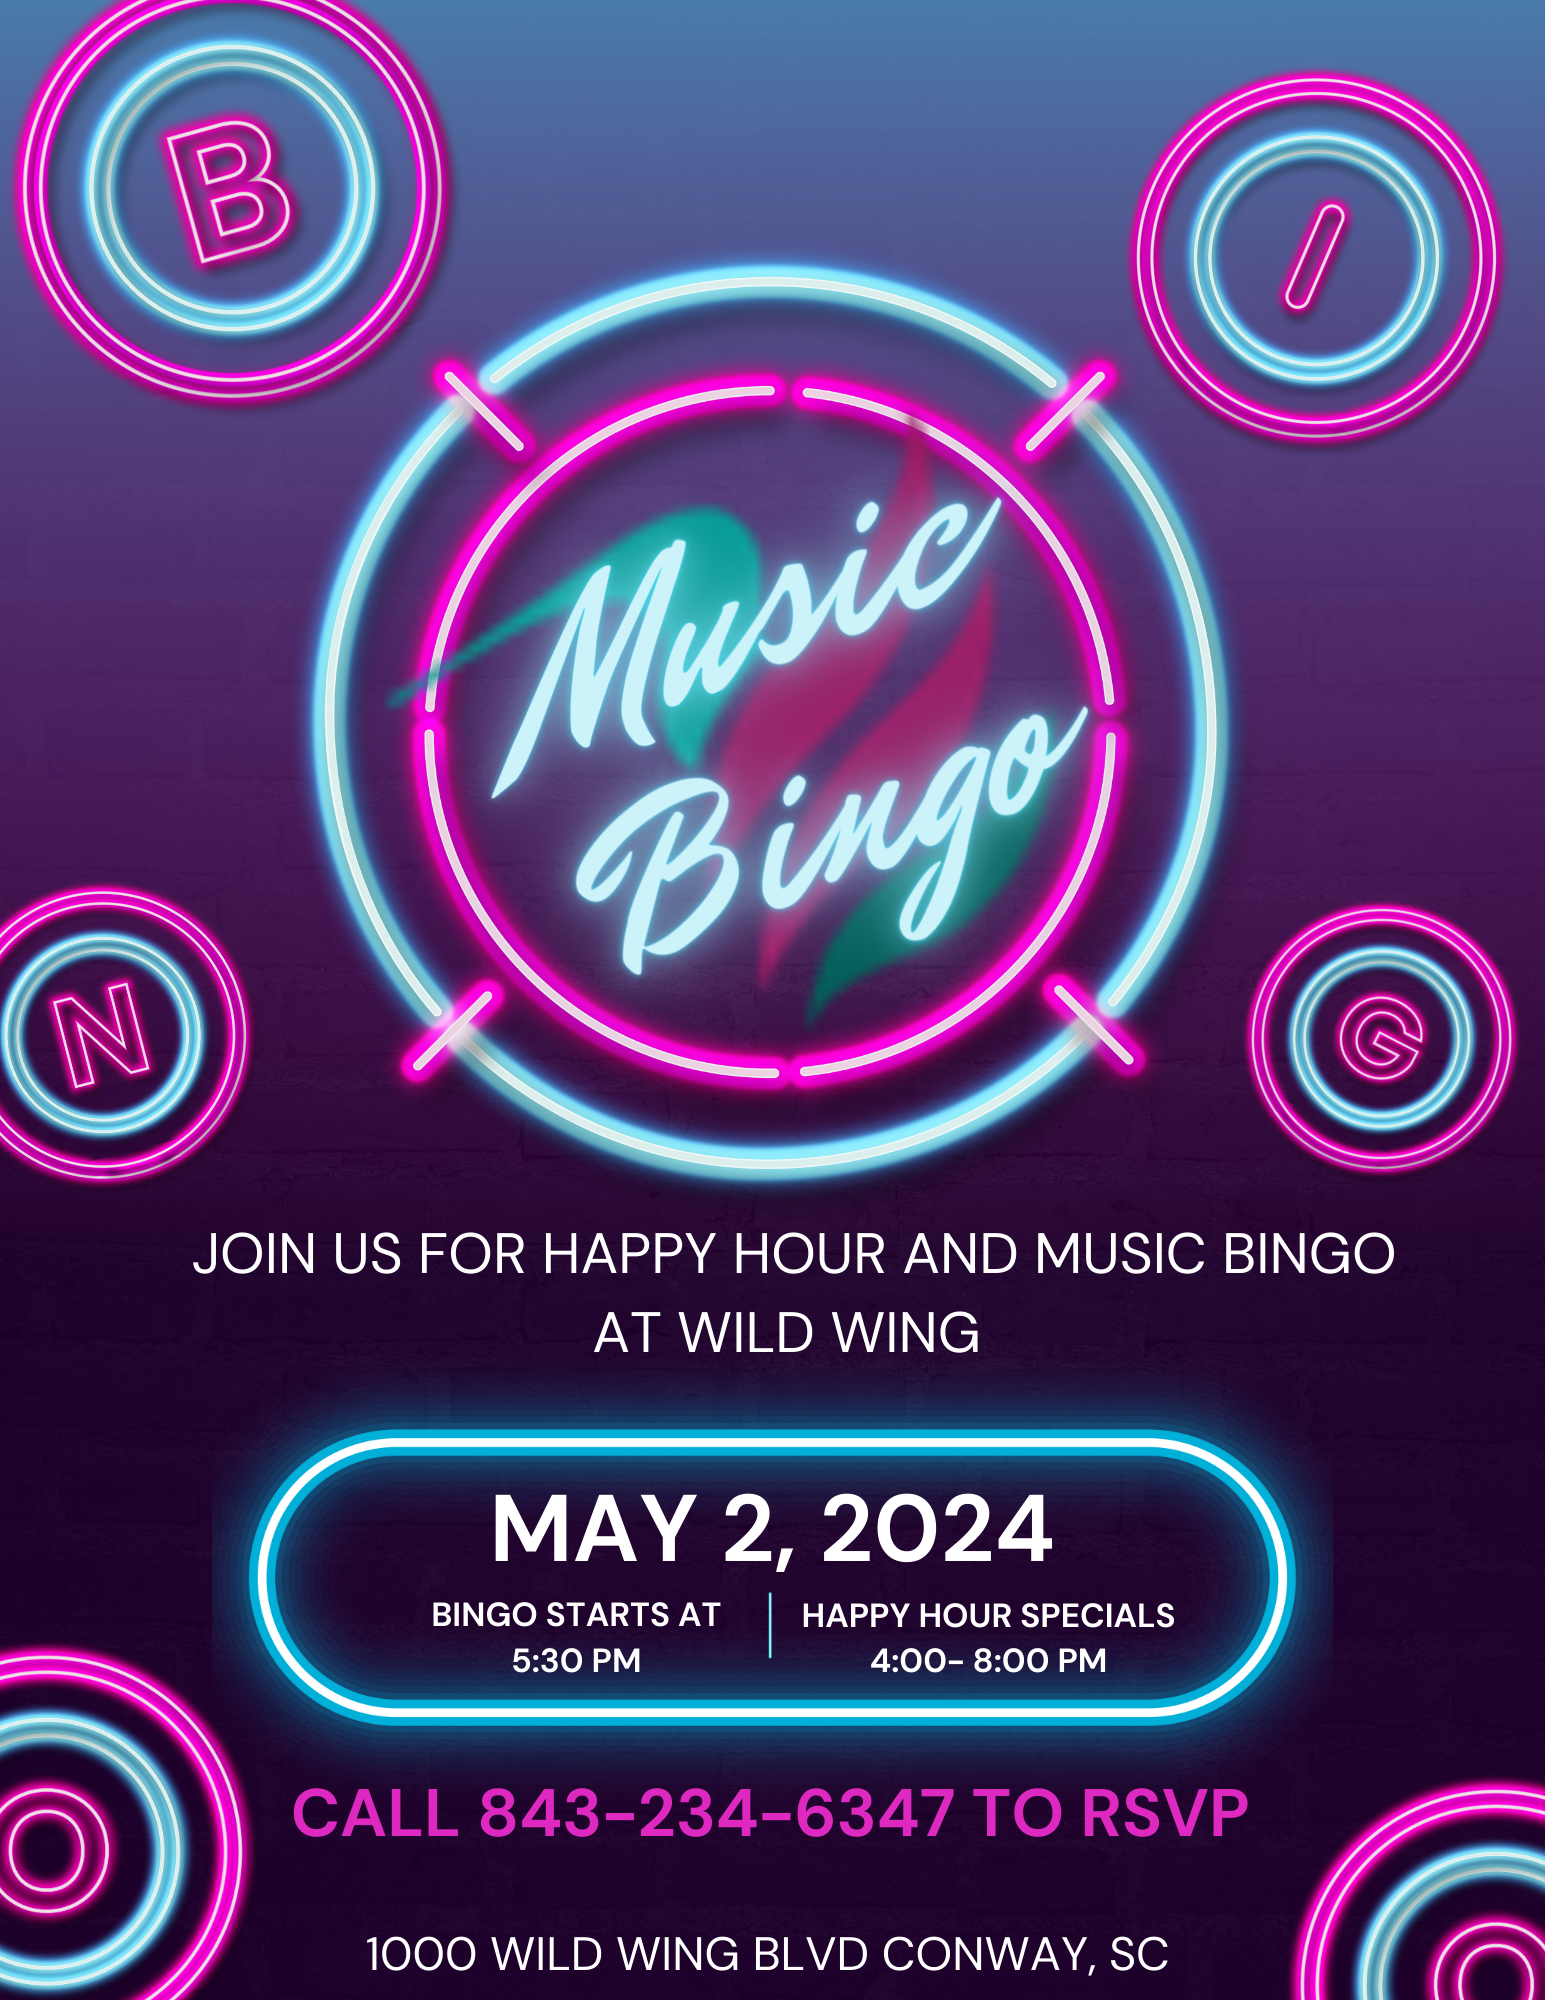 Image: Wild Wing Music Bingo & Happy Hour